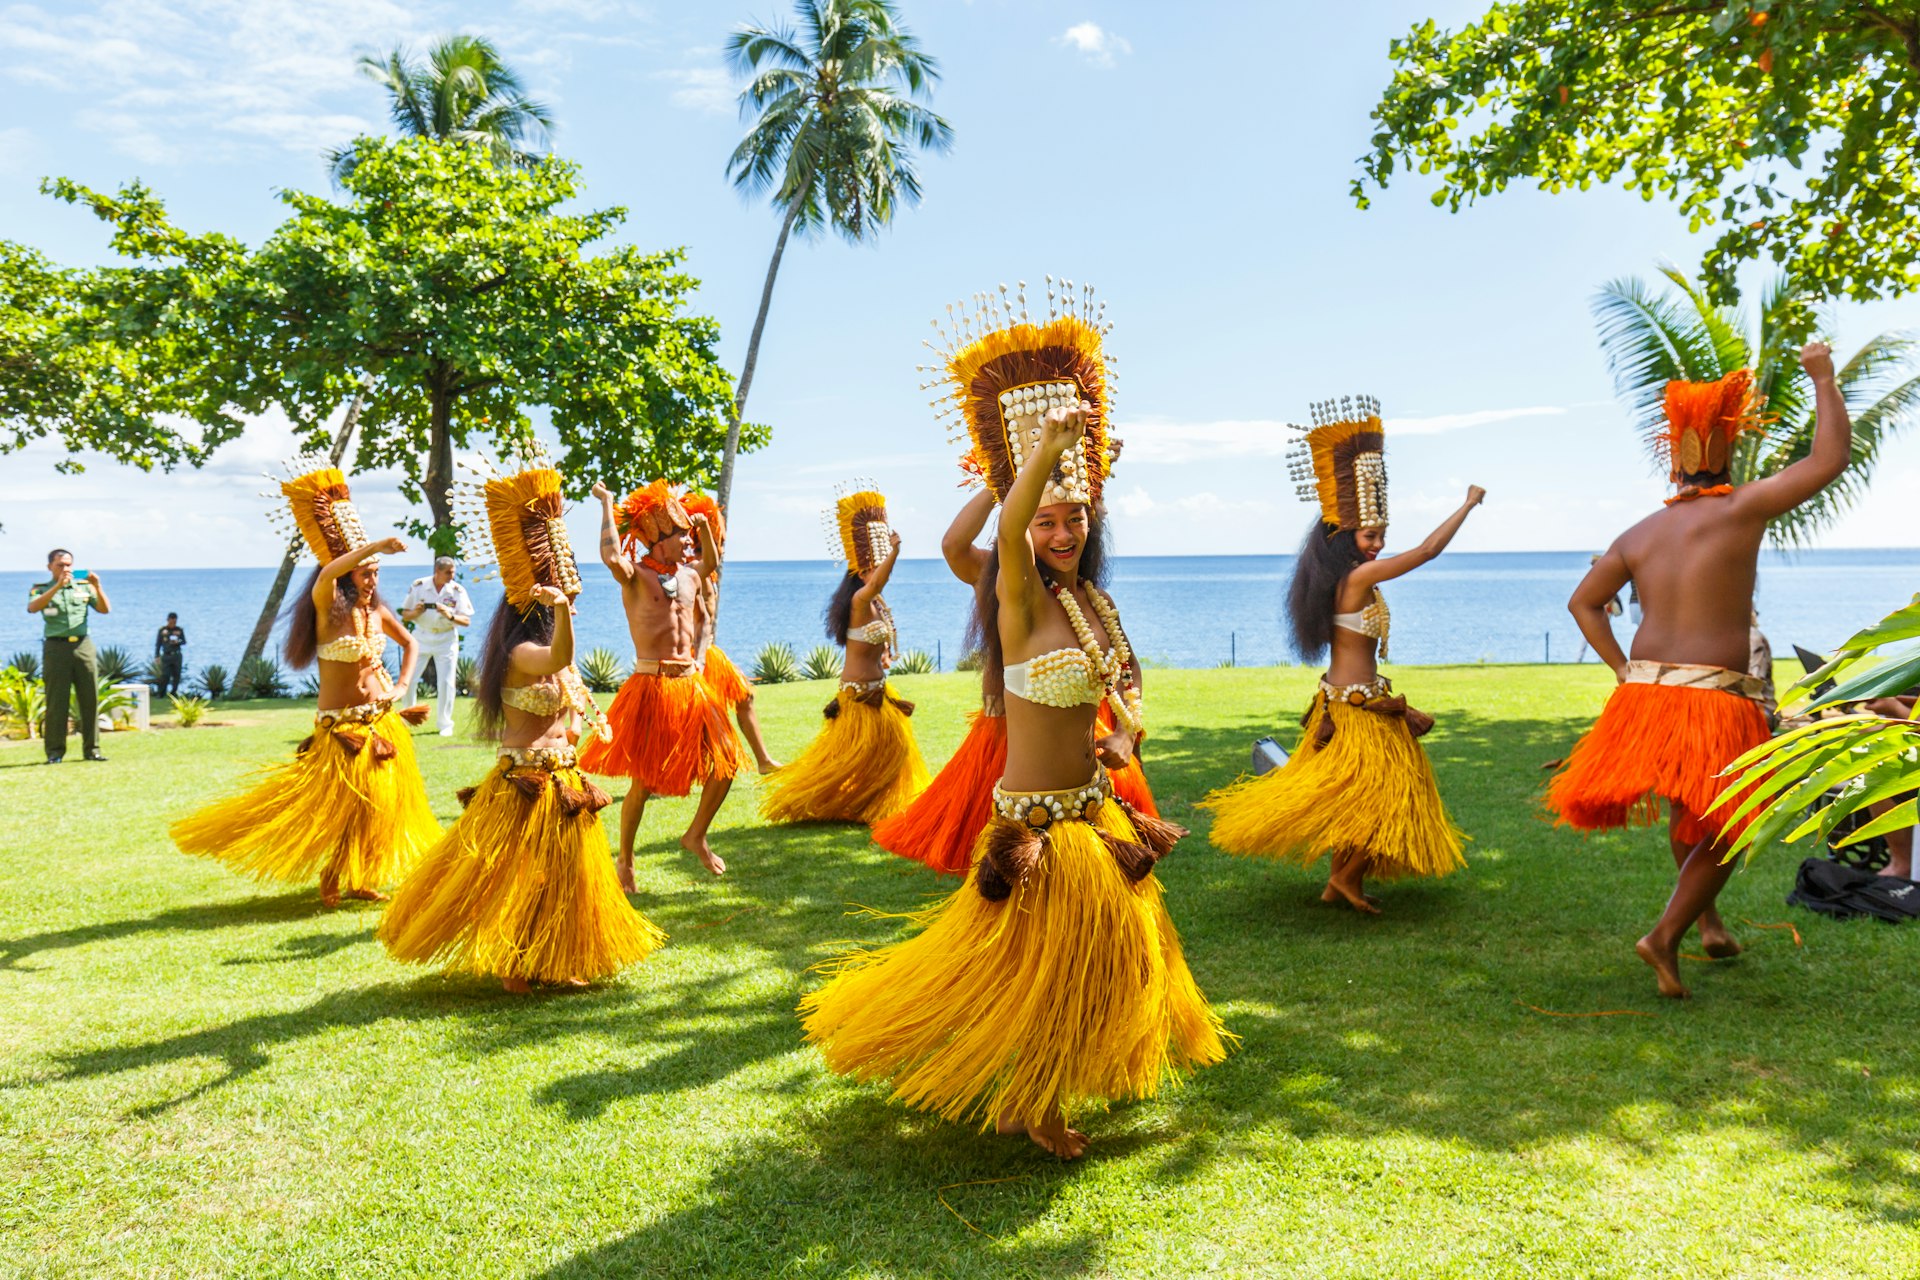 Polynesian women perform traditional dance in Papeete, Tahiti, French Polynesia